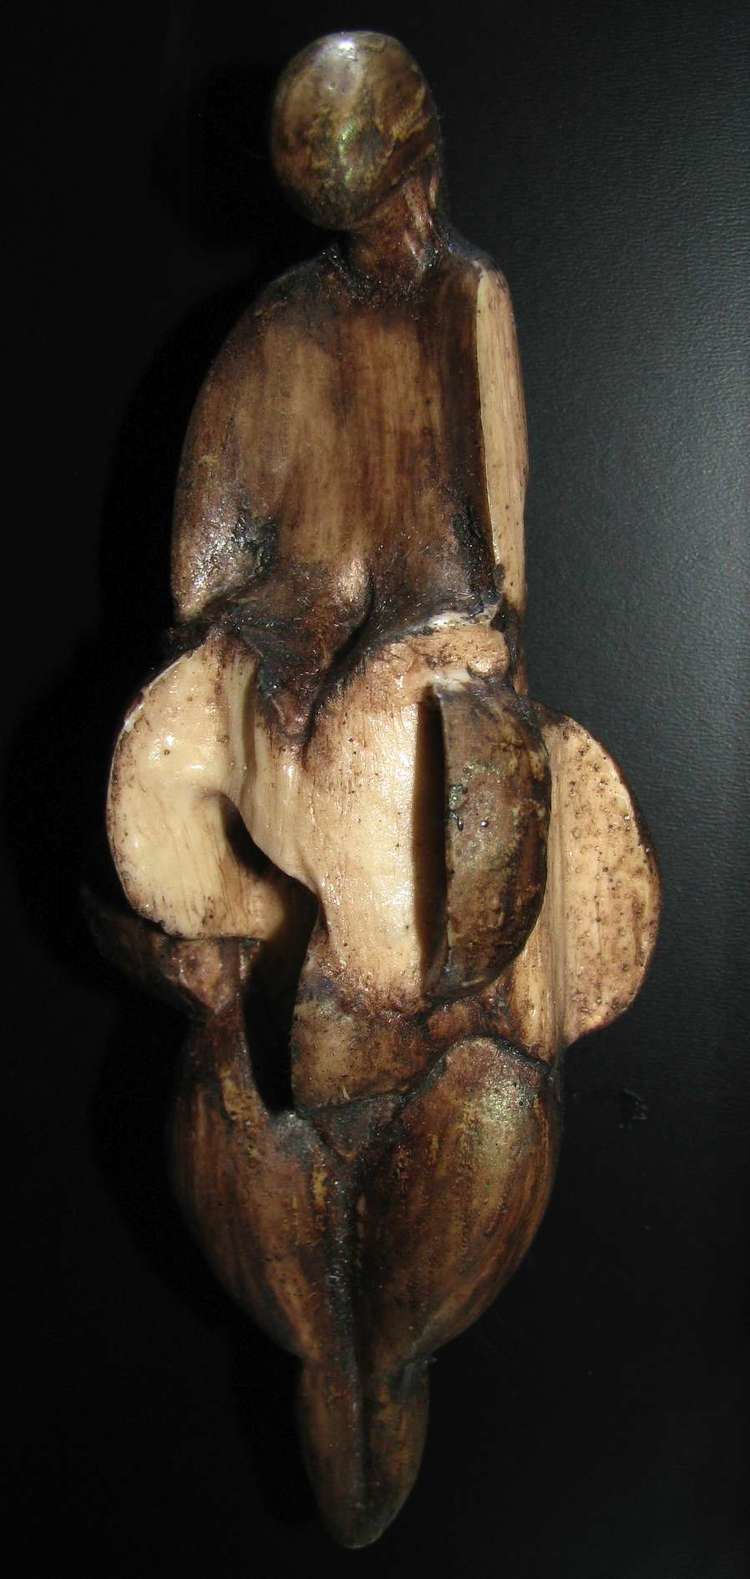 Venus of Lespugue The Lespugue Venus is a 25 000 years old ivory figurine of a nude